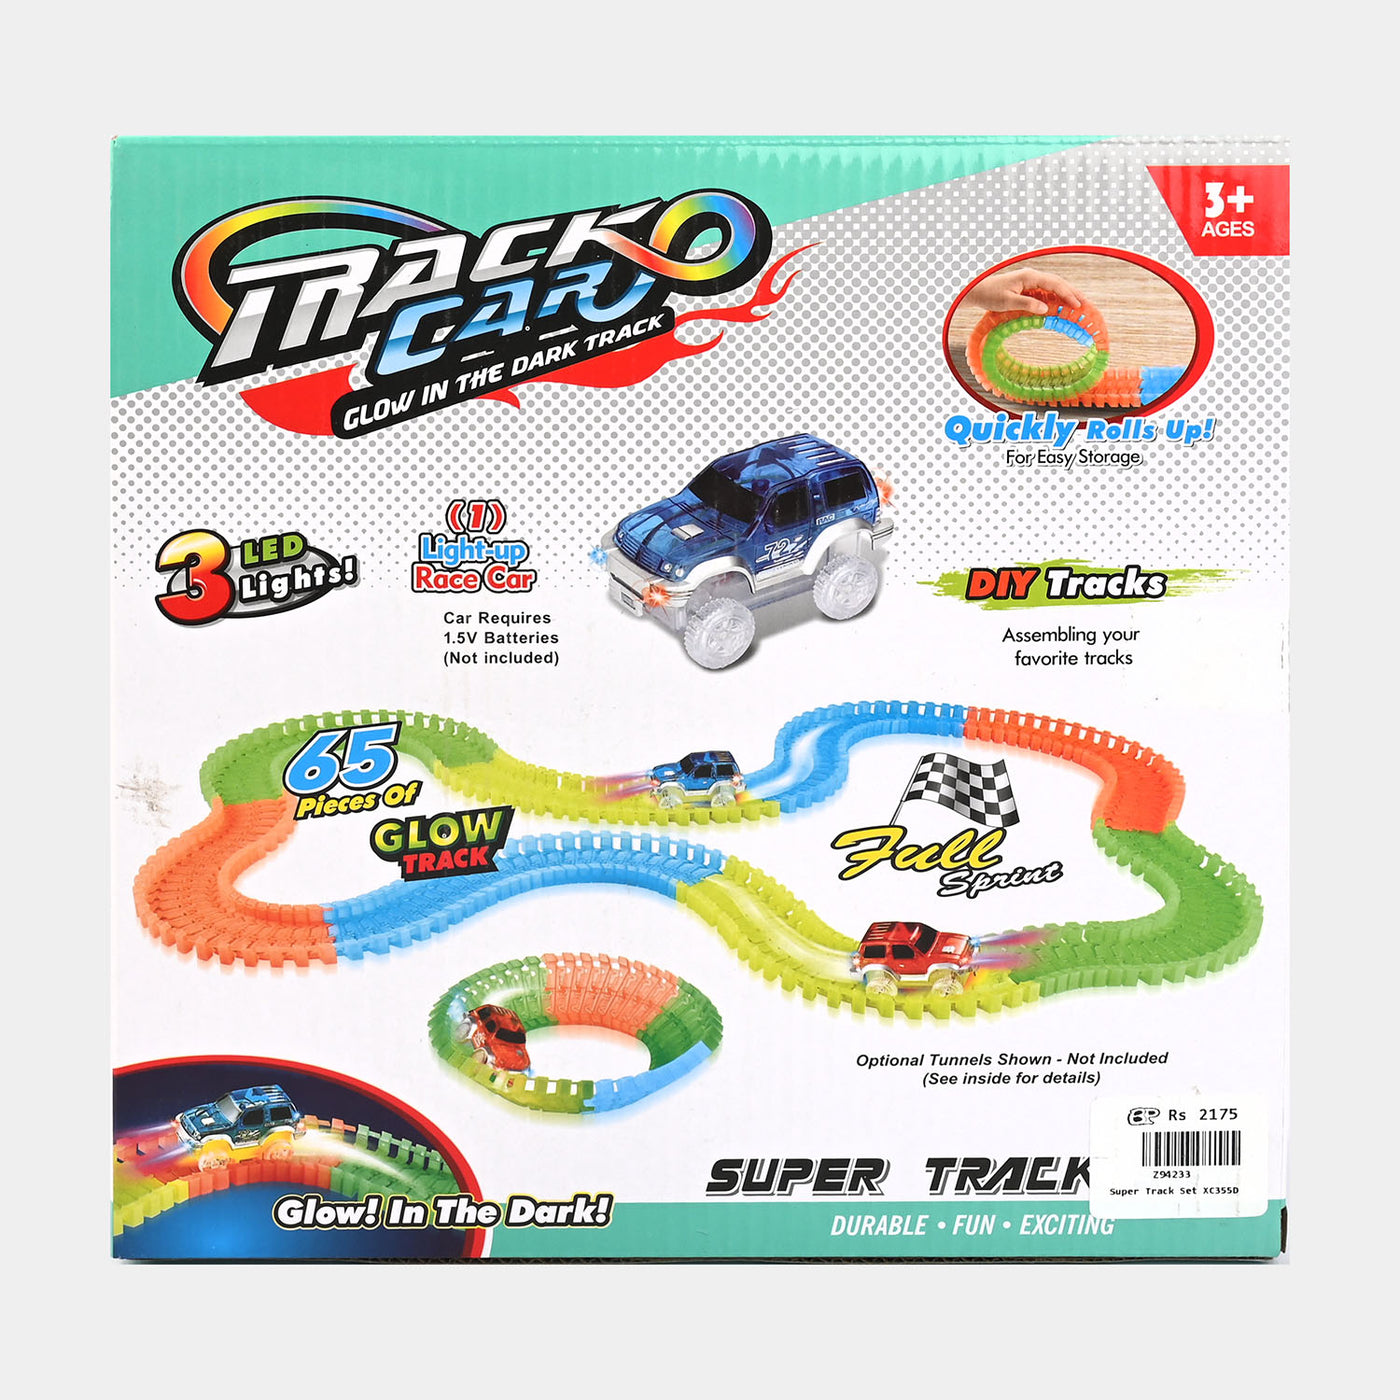 Super Track Play Set For Kids